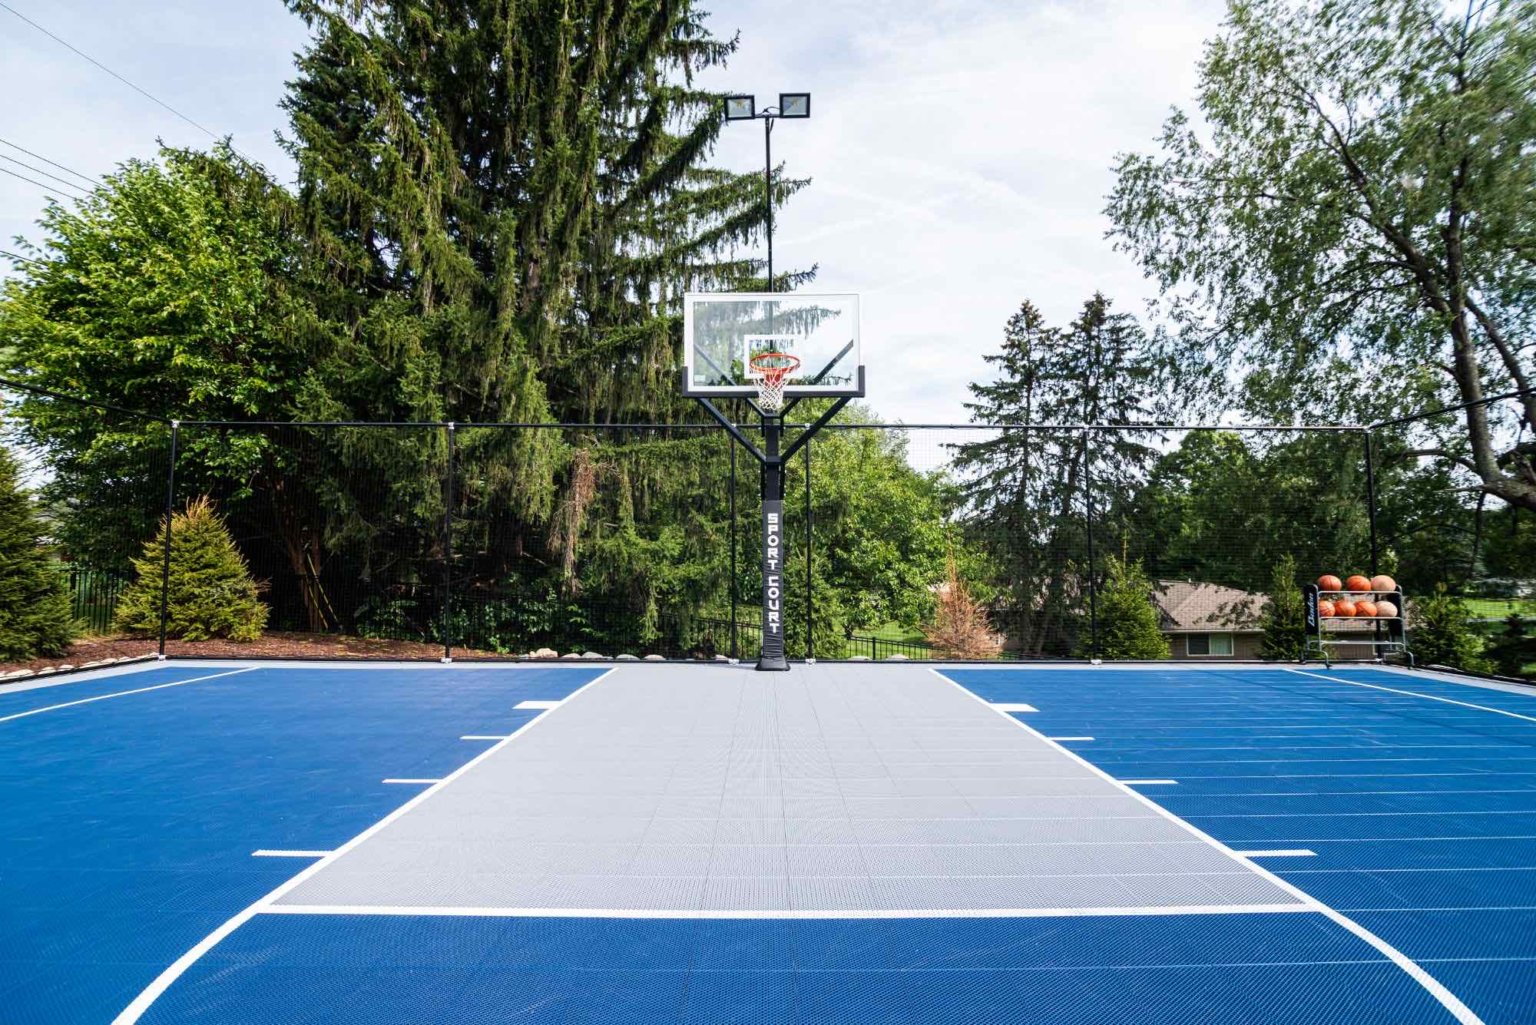 Antonelli Landscape pool spa, basketball court, outdoor basketball court, basketball half court, backyard sports, backyard basketball court